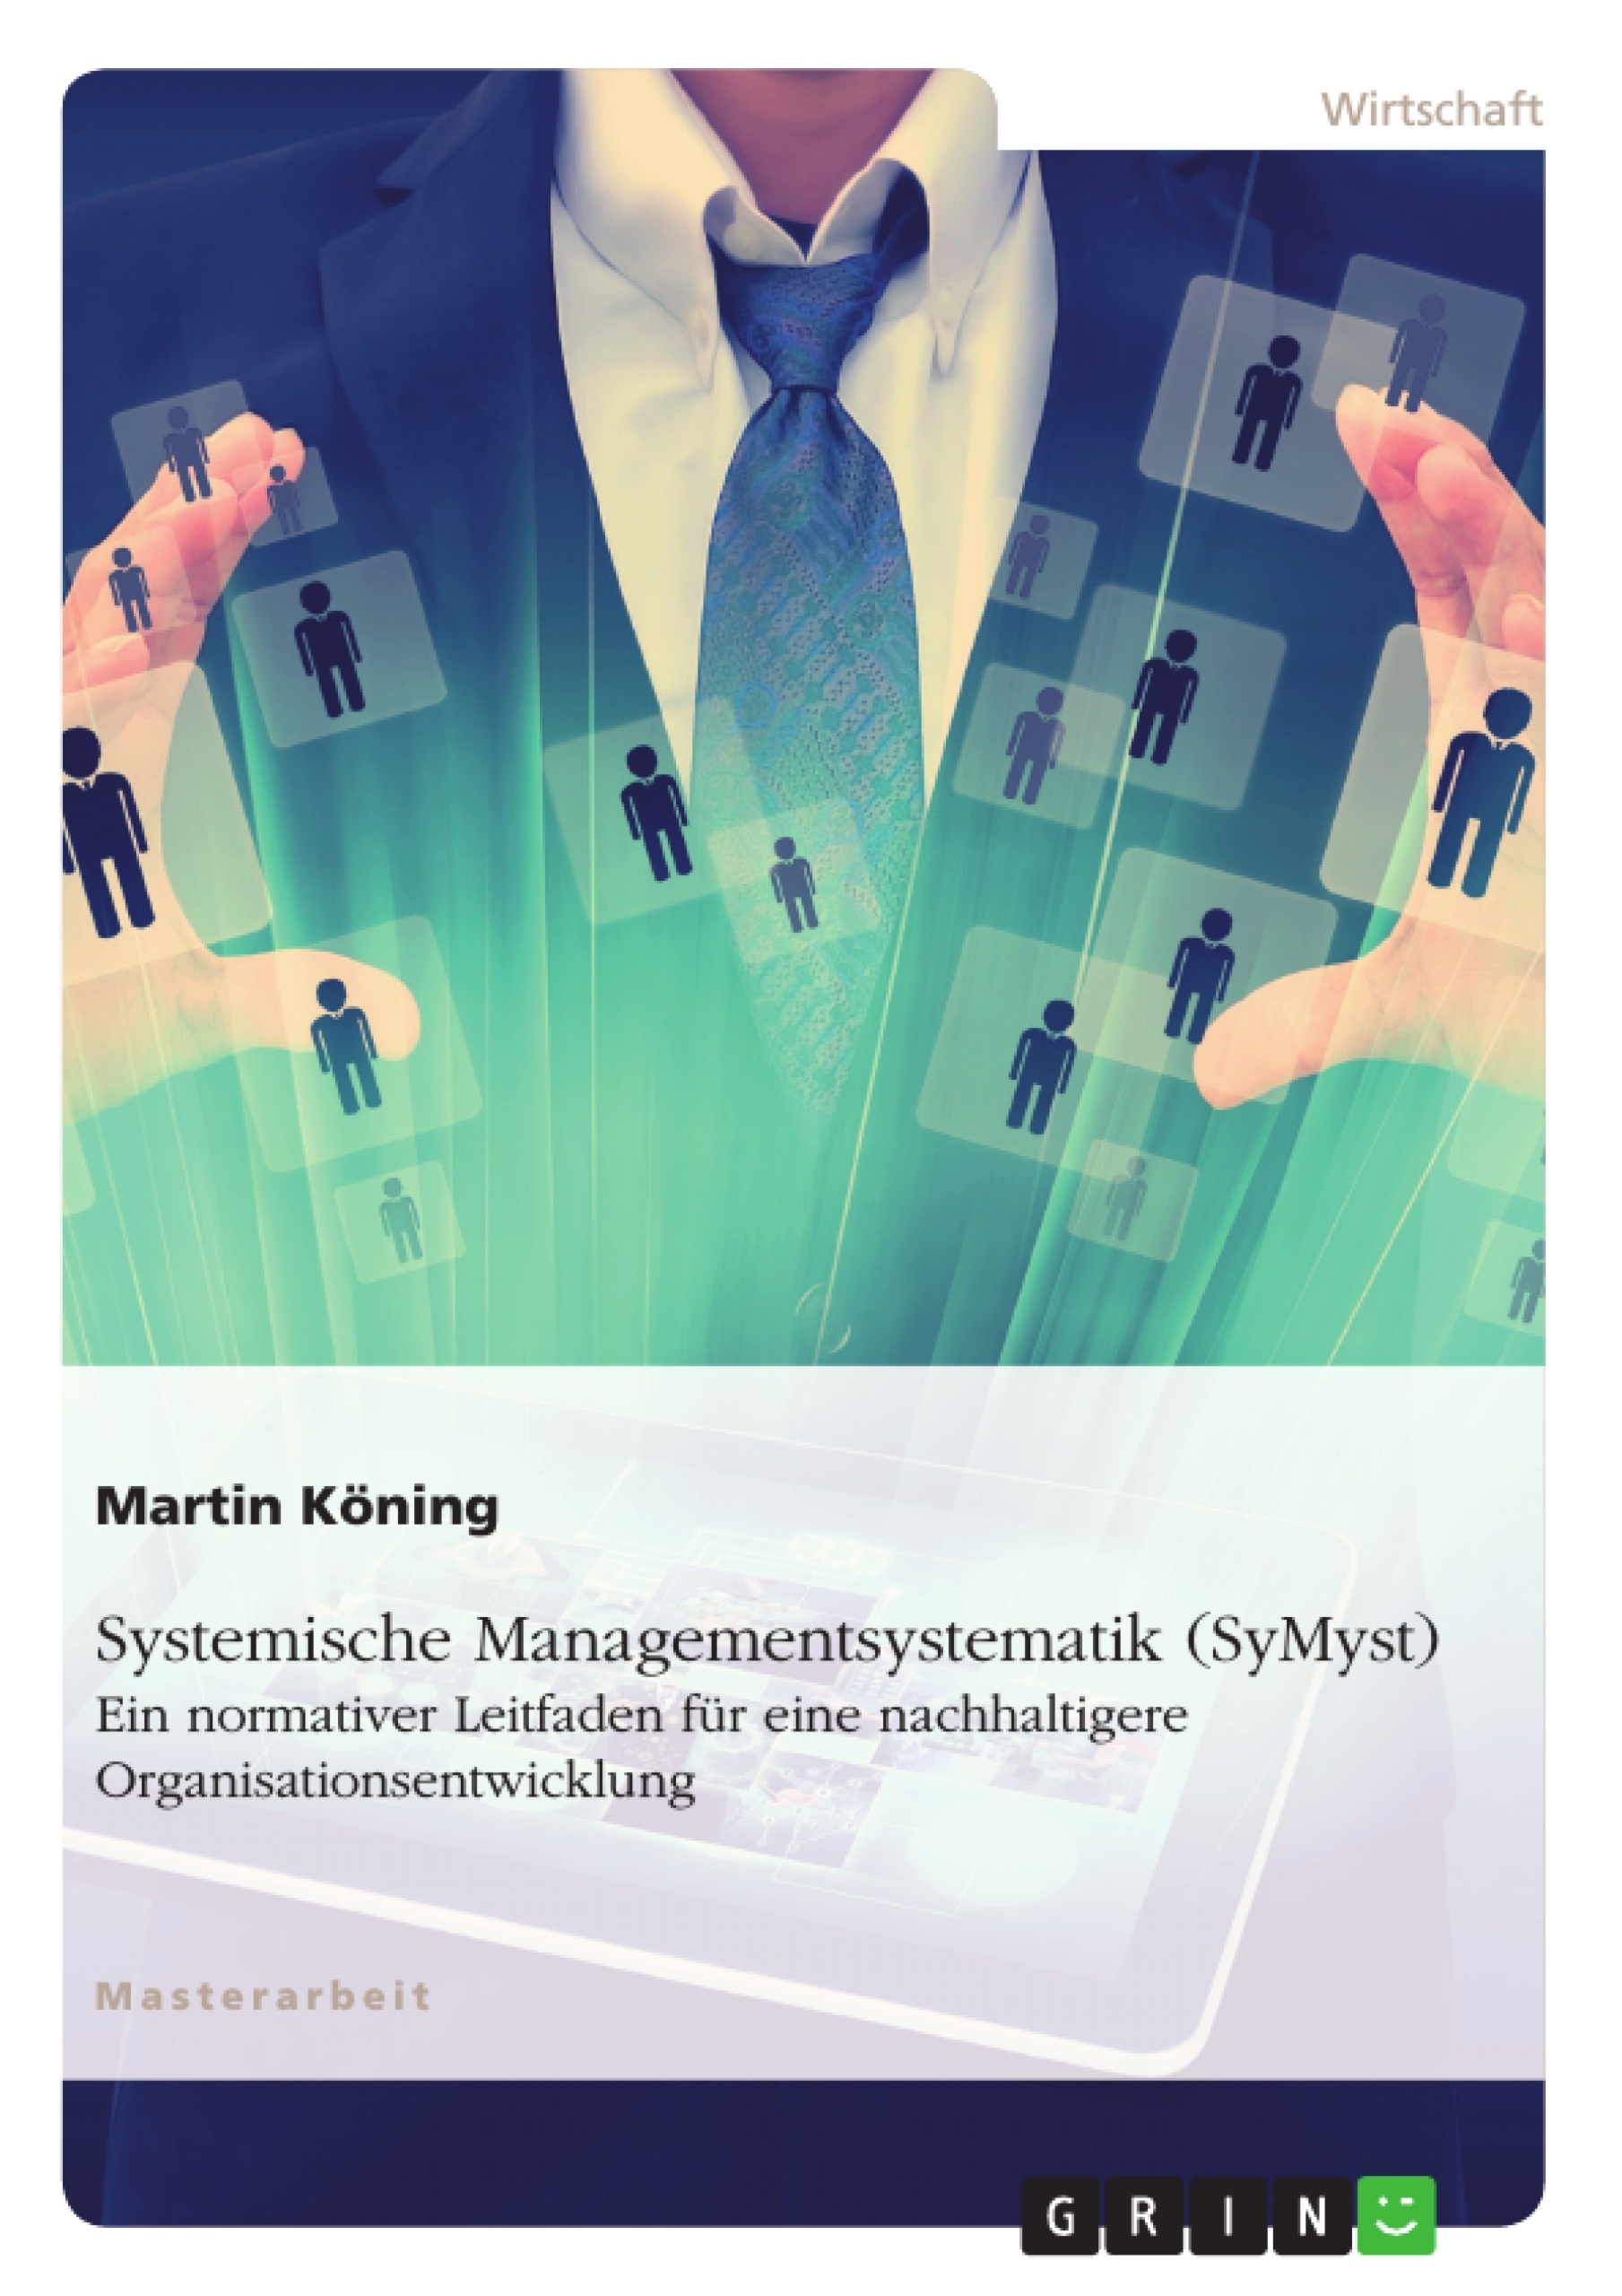 Título: Systemische Managementsystematik (SyMsyt)